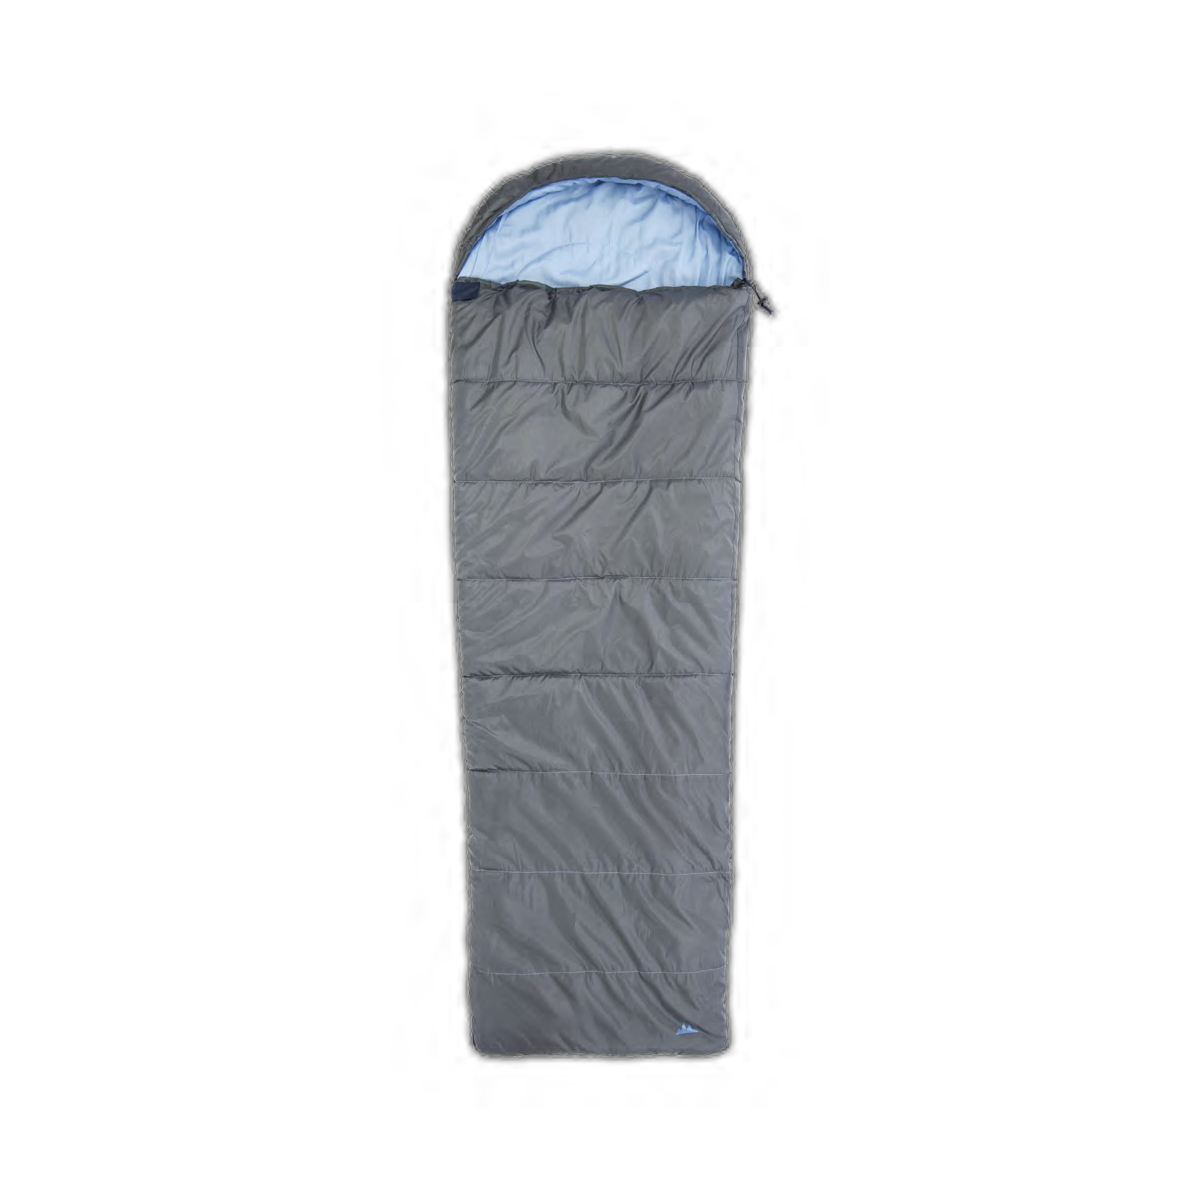 Hooded Sleeping Bag - Glacier | Kmart